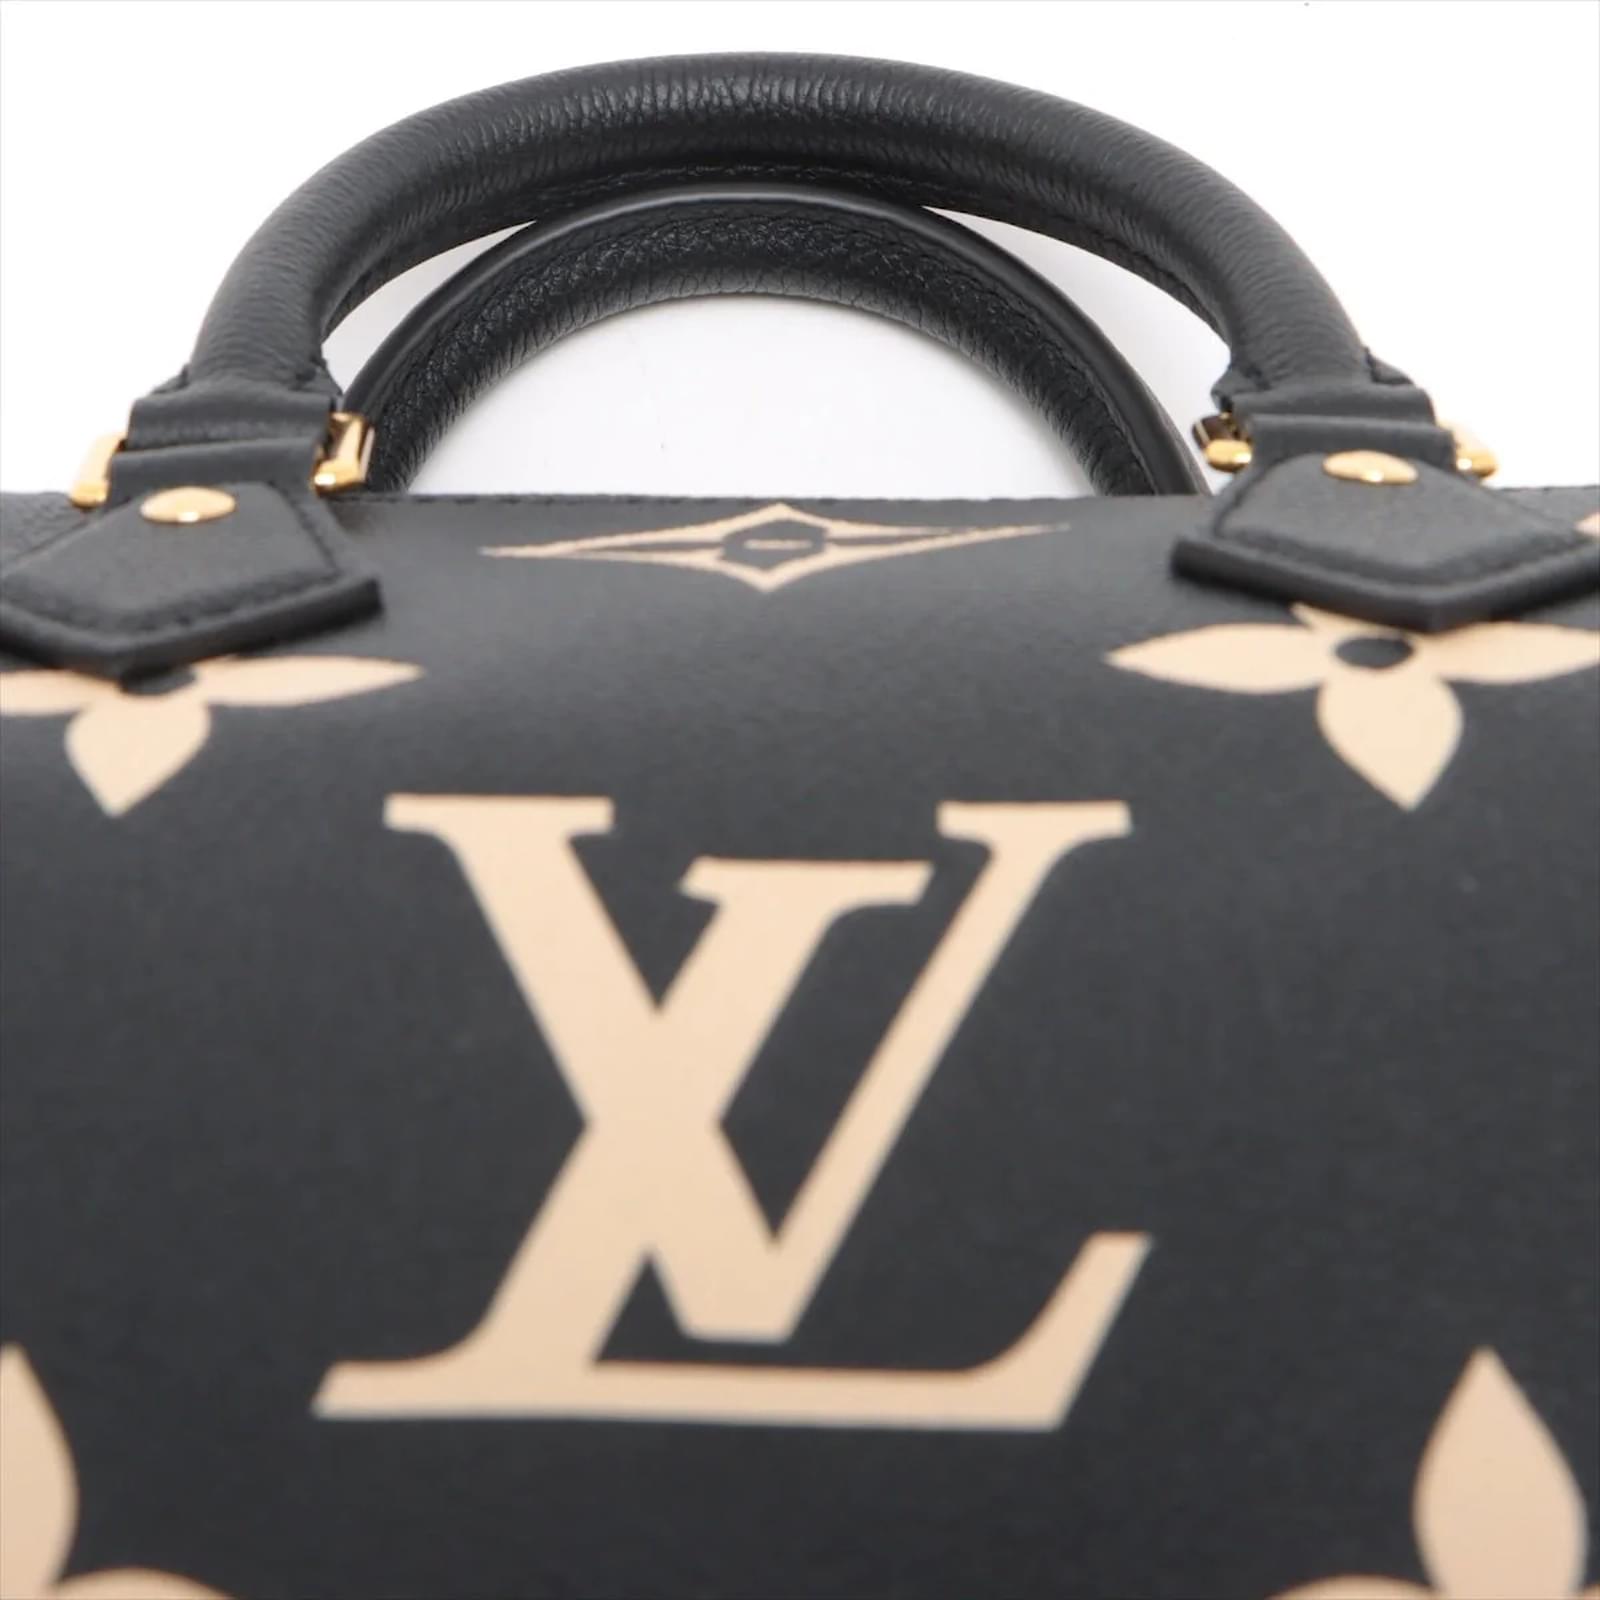 Handbags Louis Vuitton Speedy 25 Bandouliere Bag Bicolor Monogram Empreinte Giant